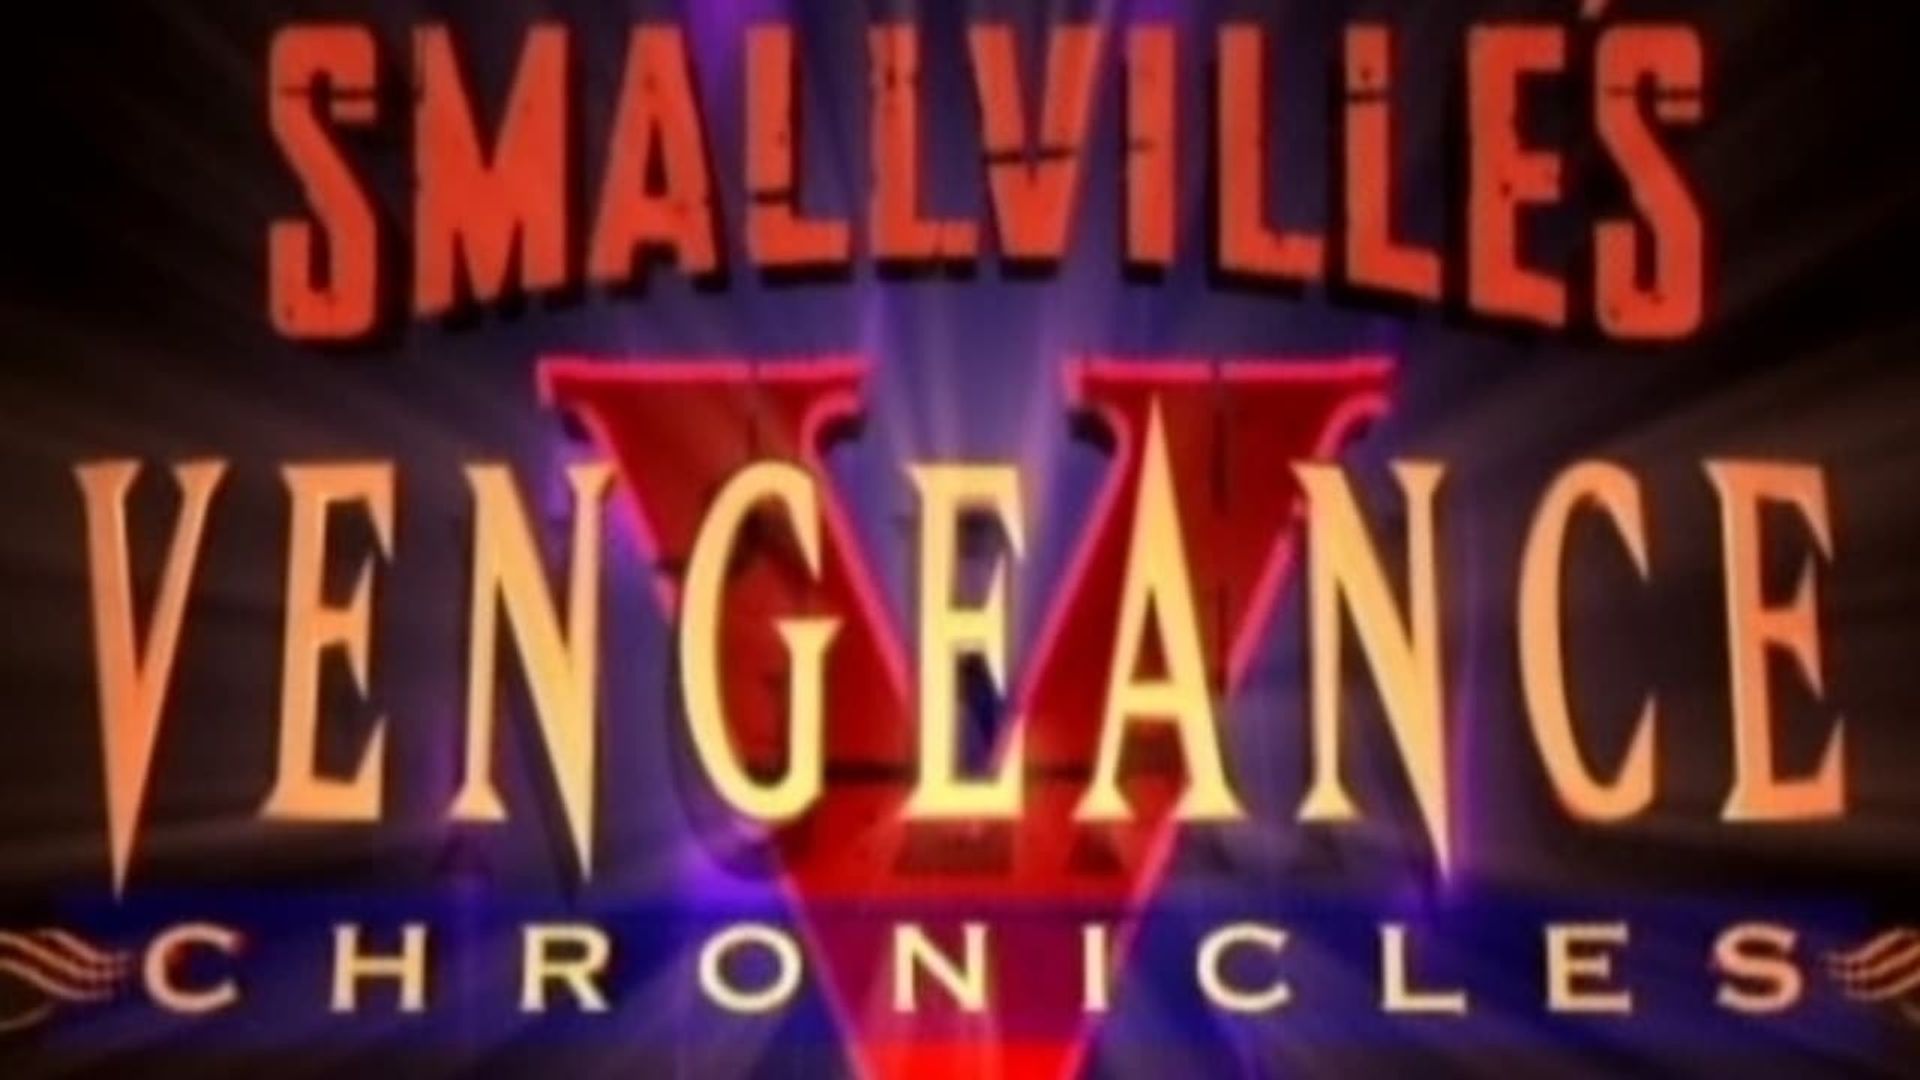 Smallville: Vengeance Chronicles background